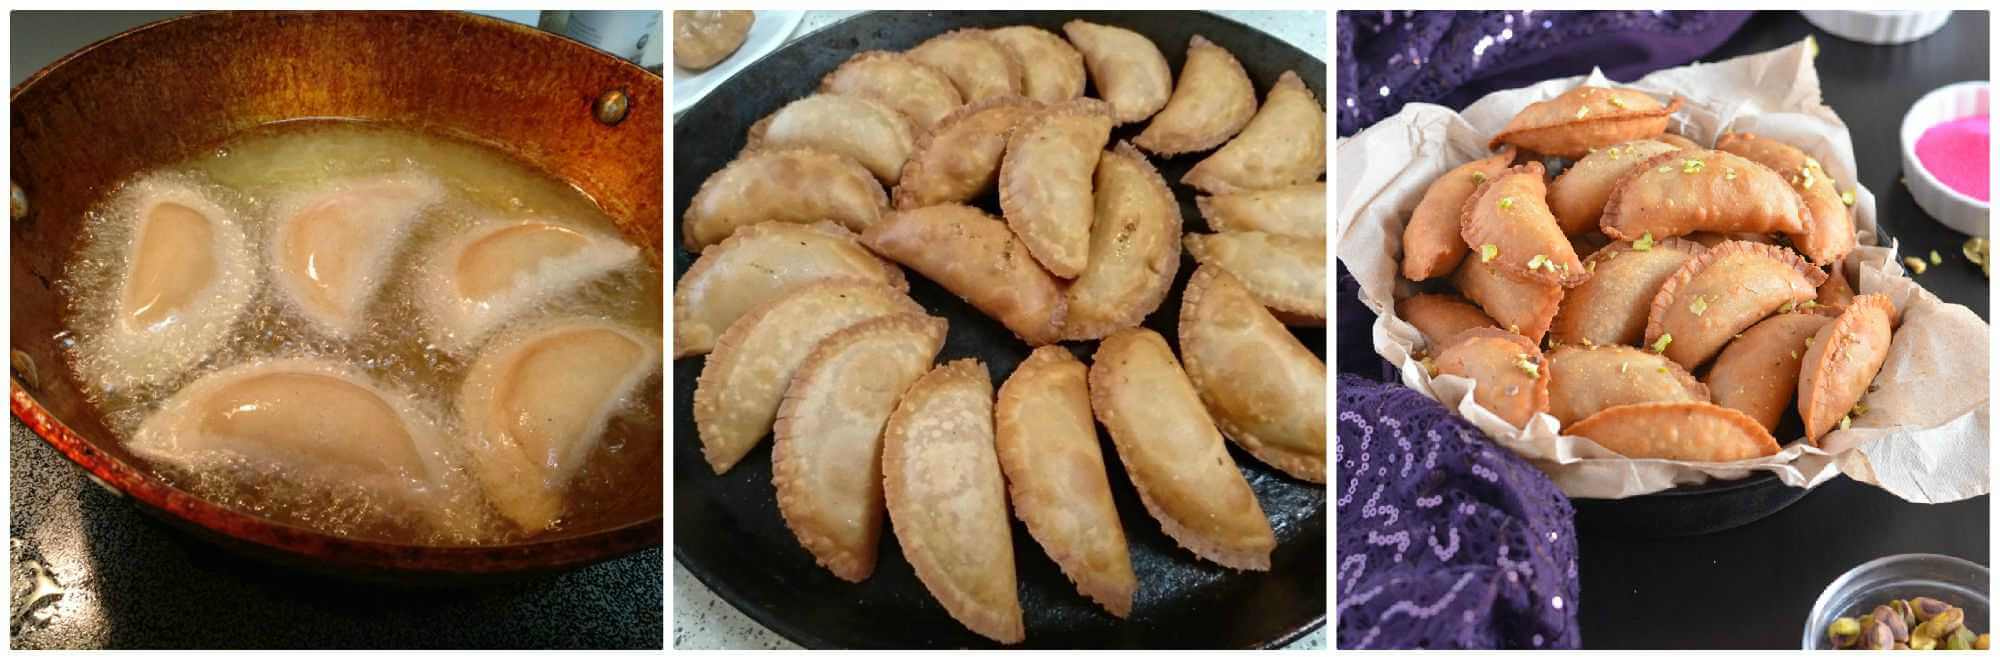 Whole wheat mawa gujiya or mawa karanji is a traditional Indian sweet prepared during Holi or Diwali, especially in North India.